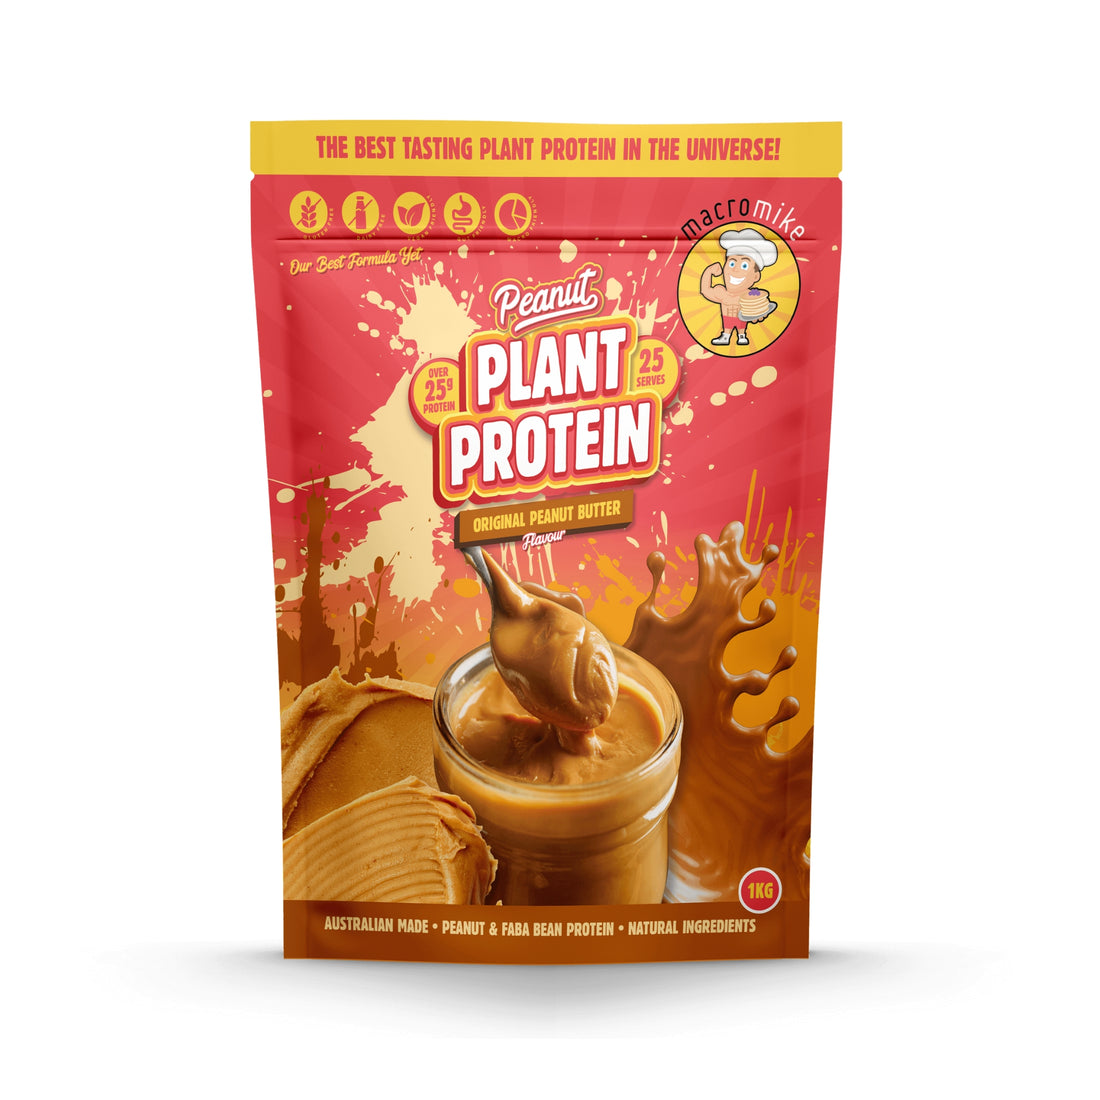 Peanut Plant Protein - Original Peanut Butter